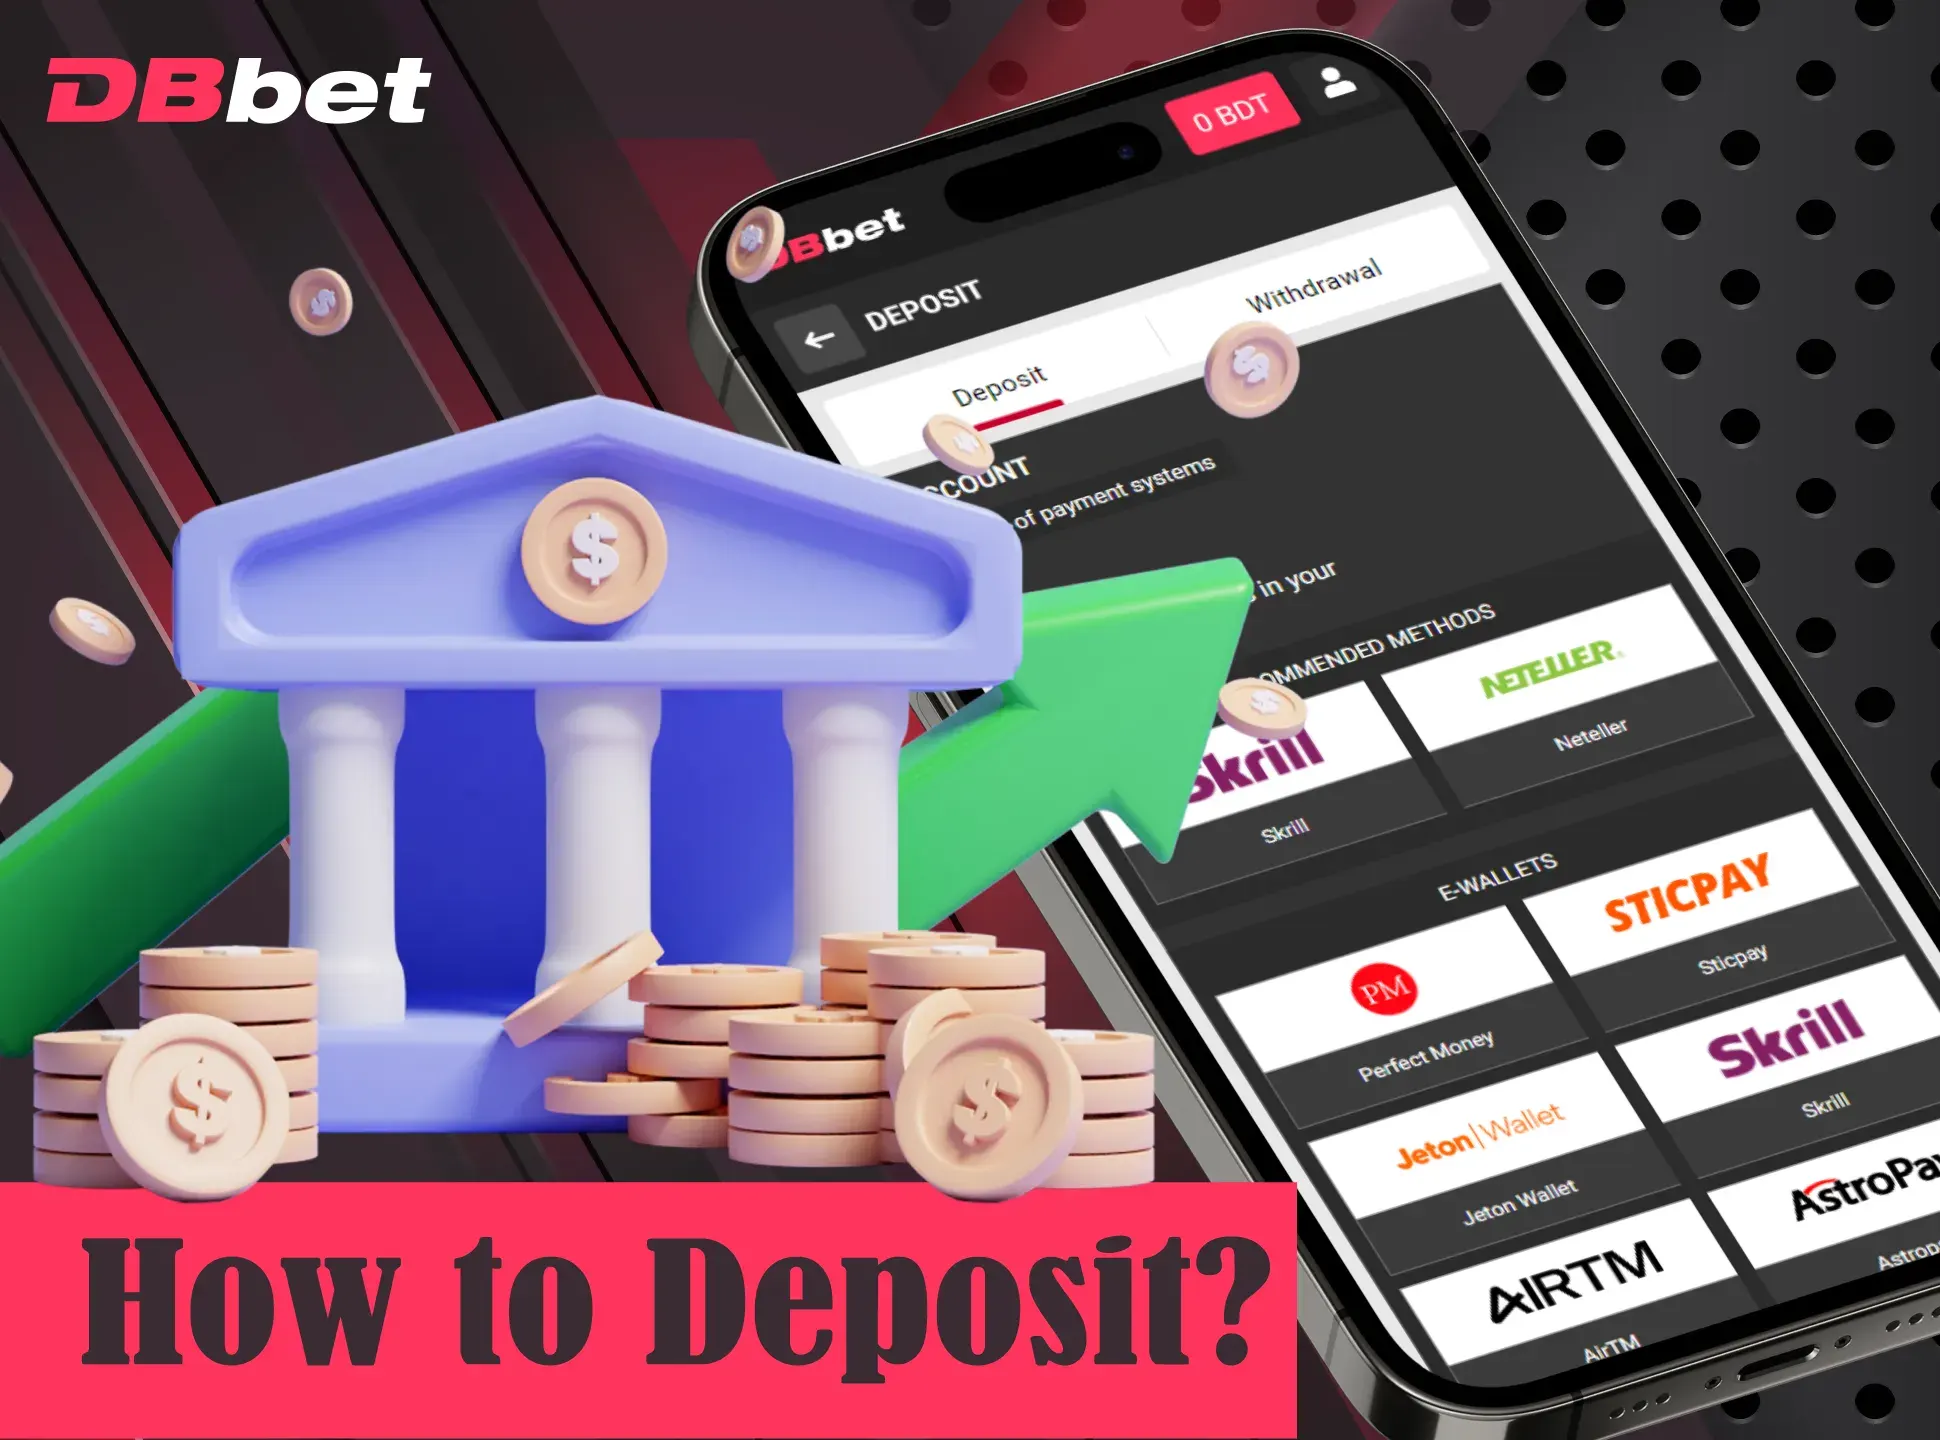 Deposit quicker with DBbet app.